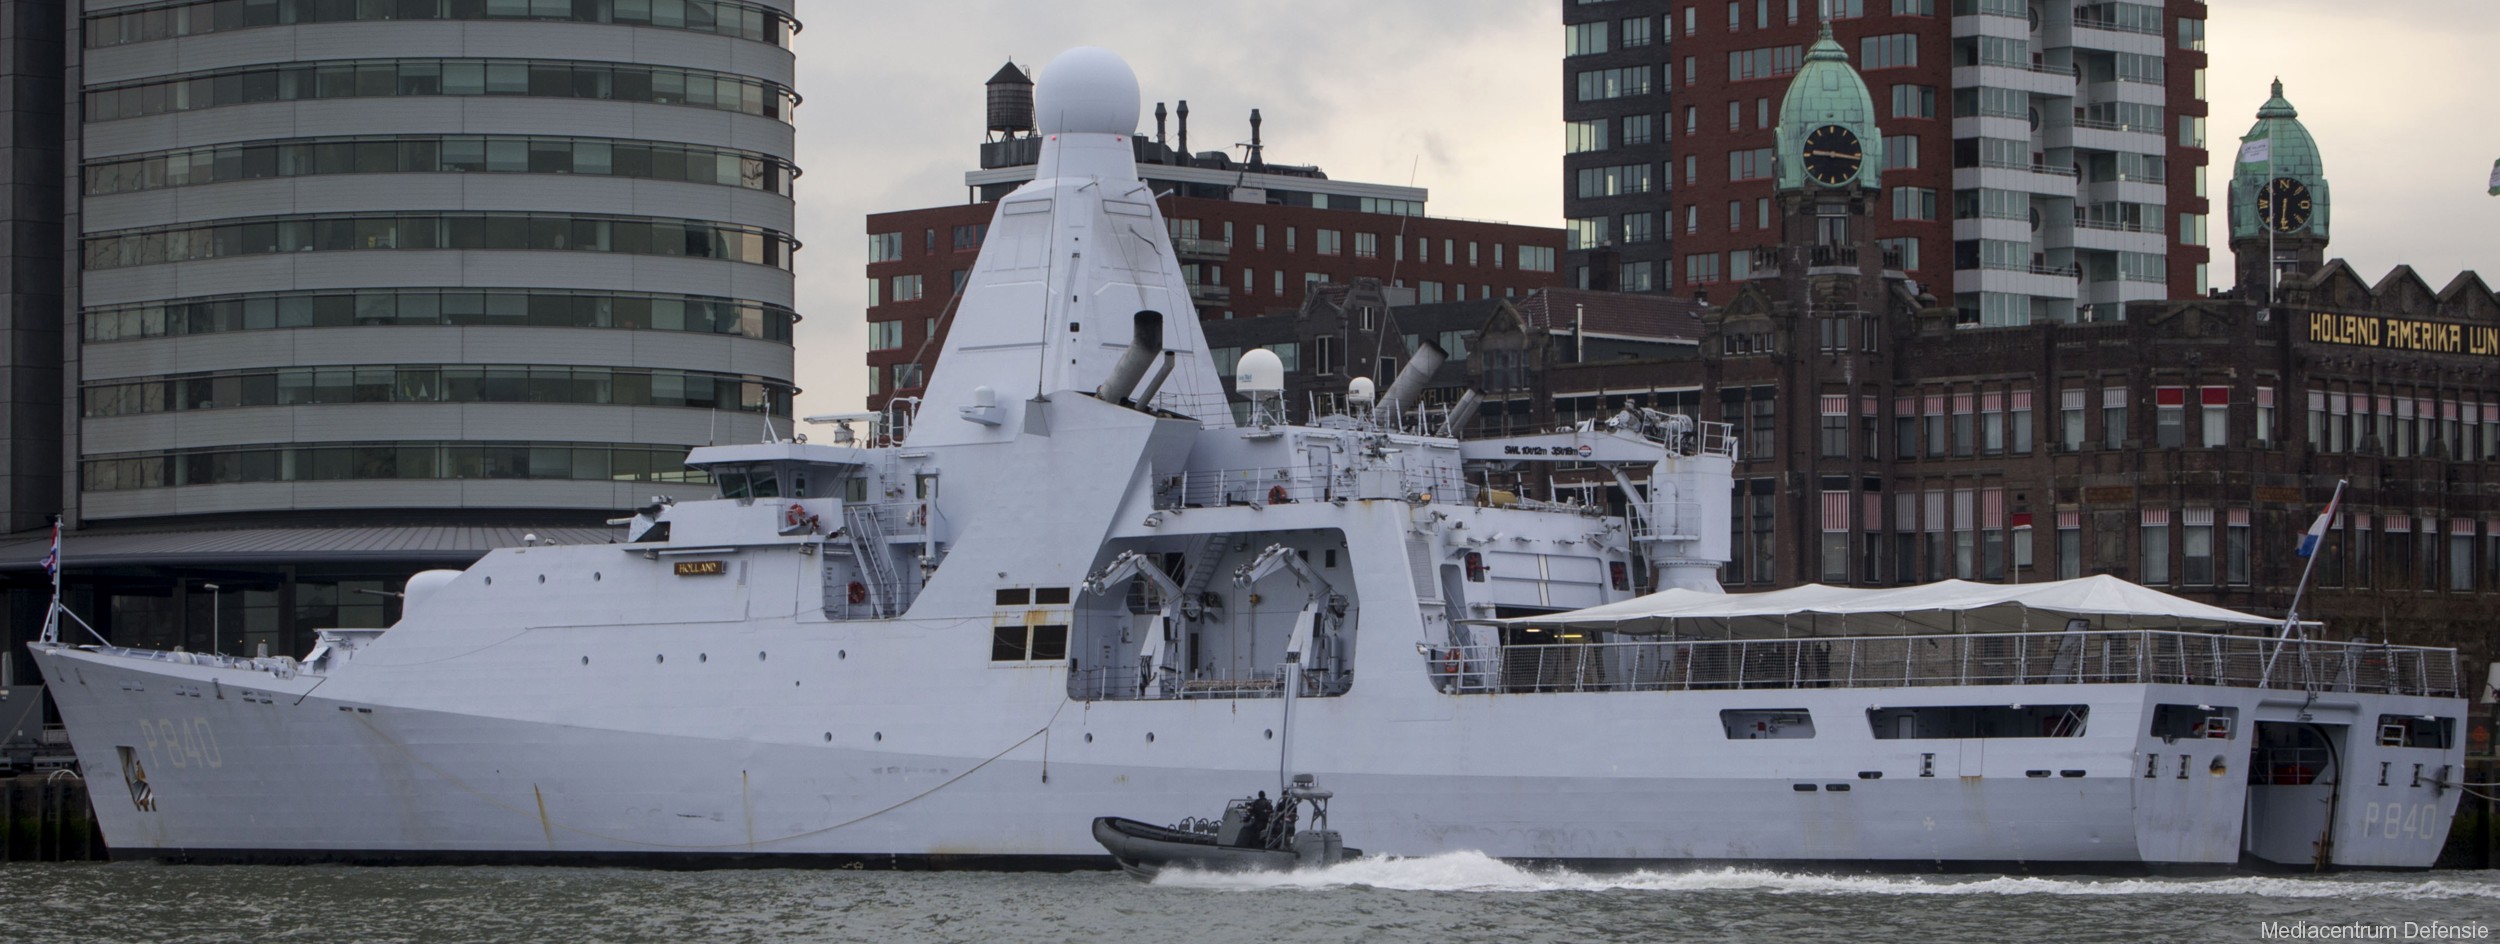 p-840 hnlms holland offshore patrol vessel opv royal netherlands navy 04 koninklijke marine zr. ms.